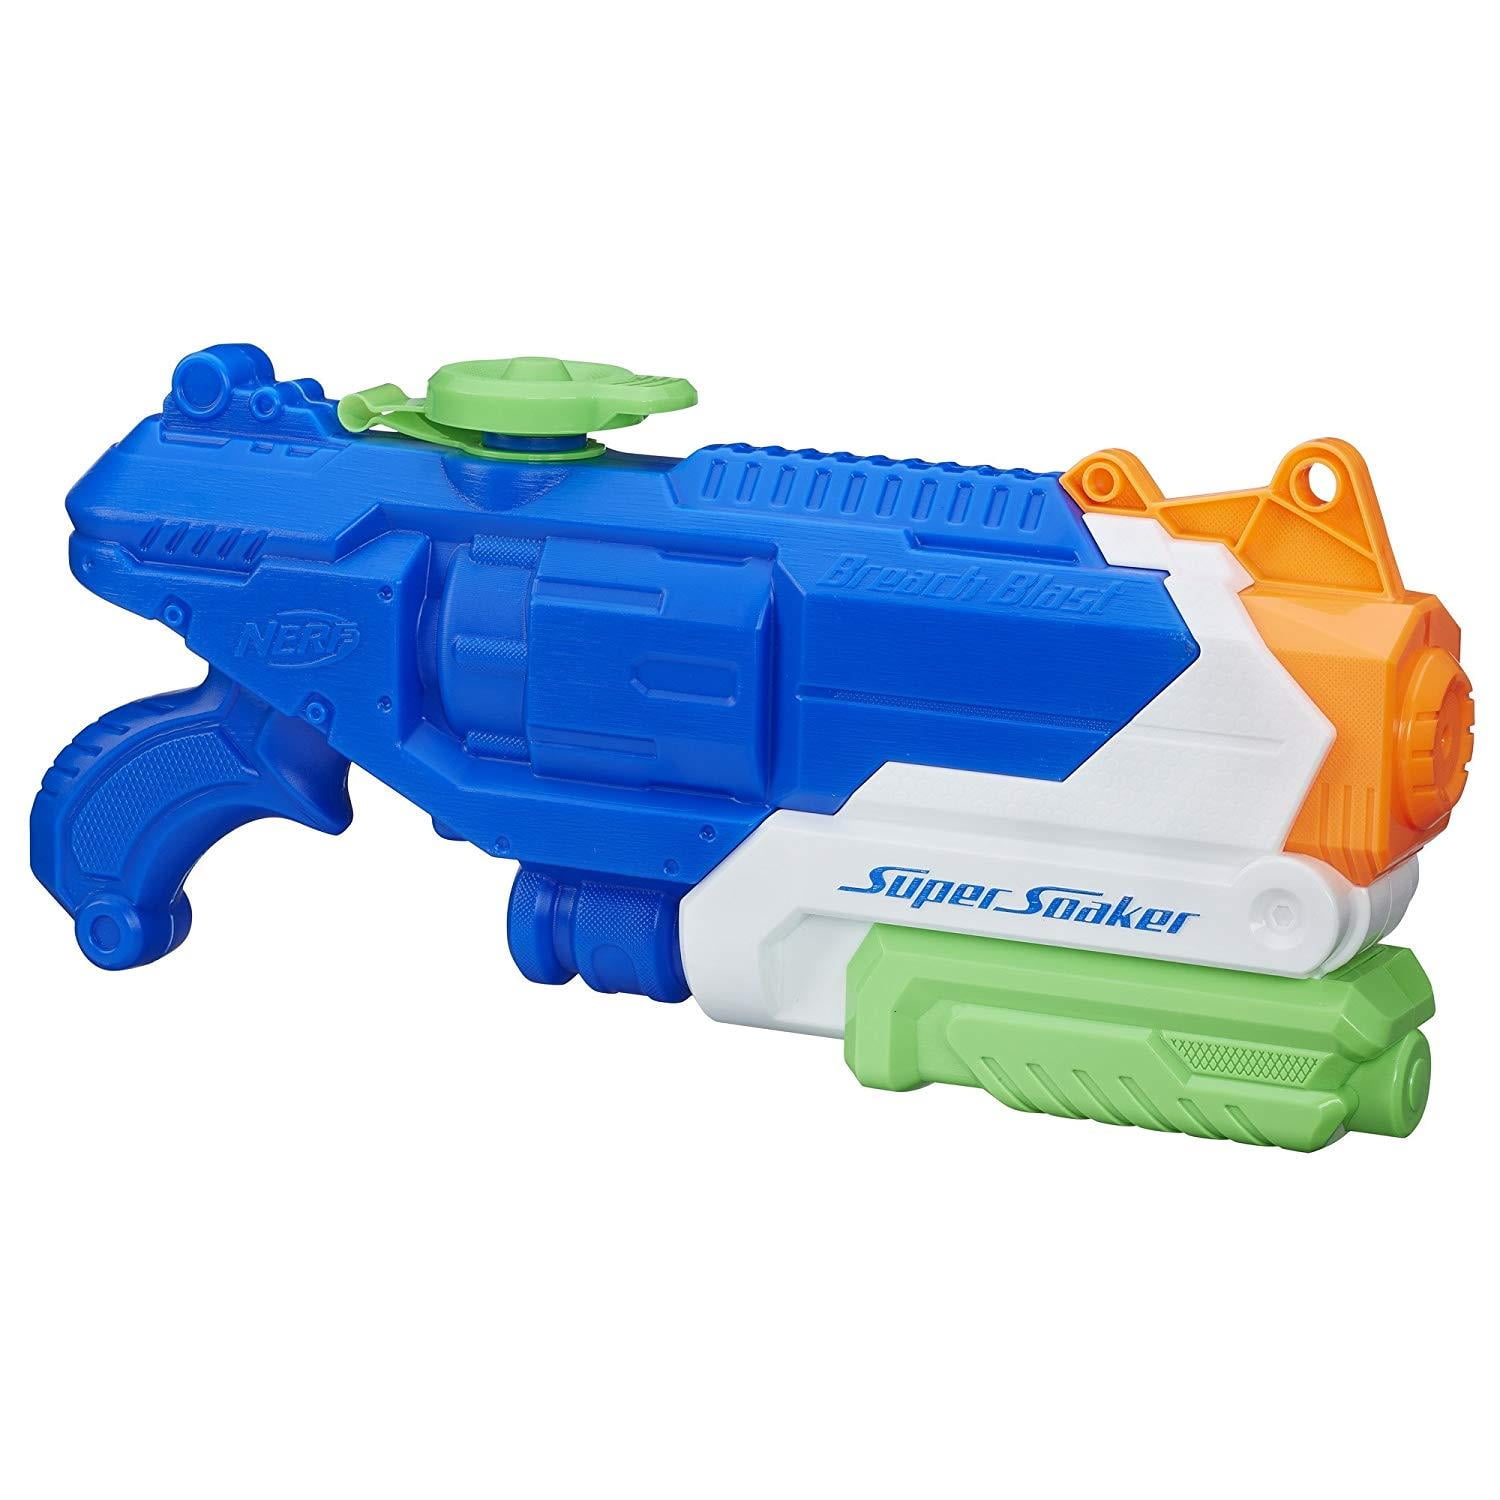 Nerf Super Soaker Breach Blast Water Blaster $4.90  + Free S&H w/ Walmart+ or $35+